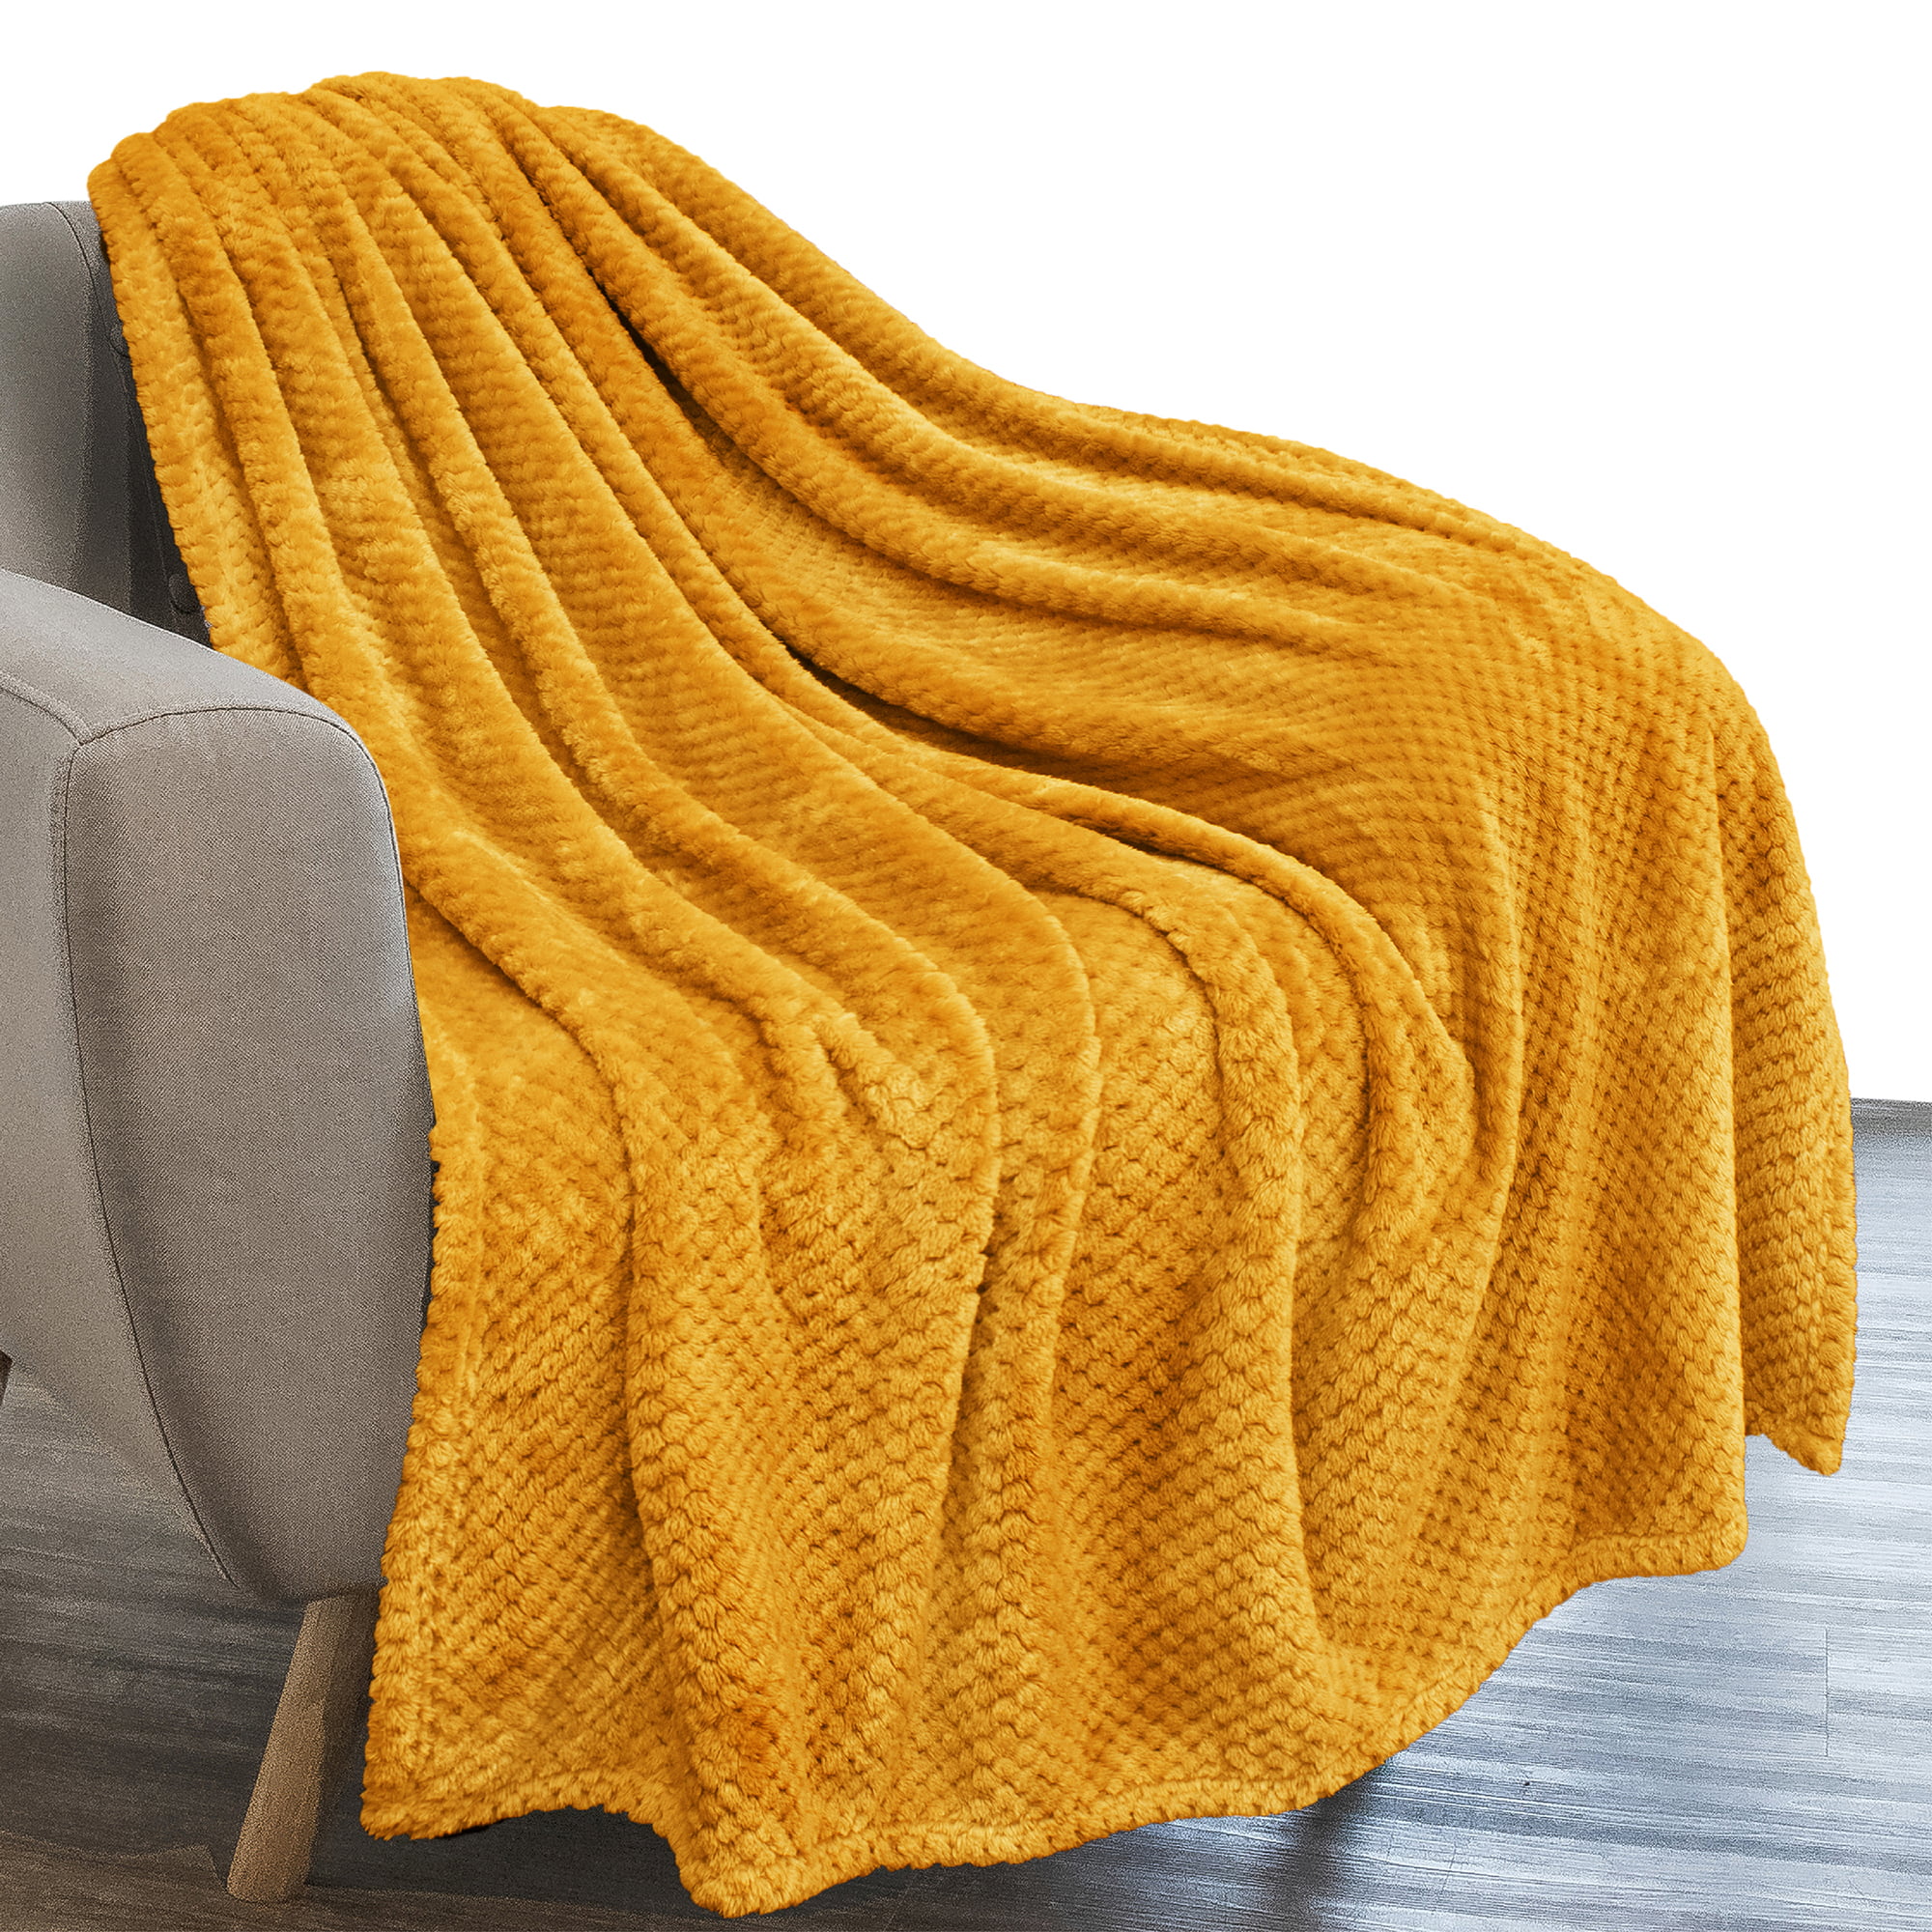 Eco Friendly Cotton Diamond Geometric Sofa Bed Throw Blanket Mustard Yellow 